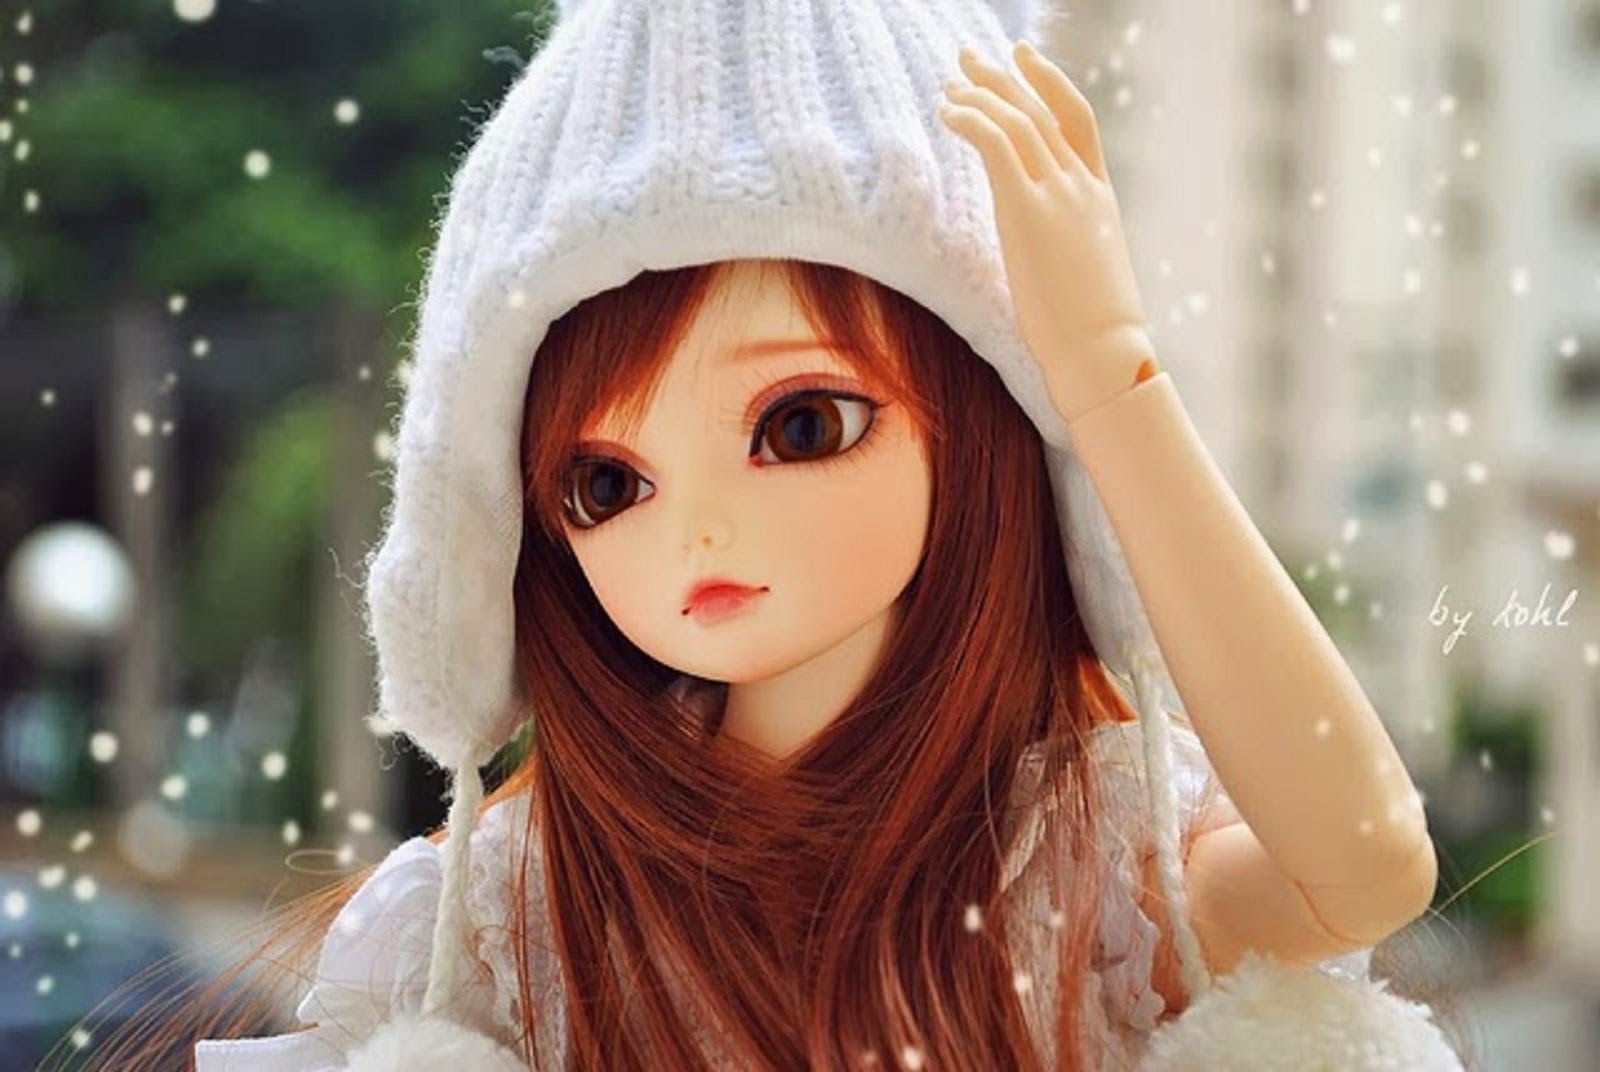 cute cute barbie doll